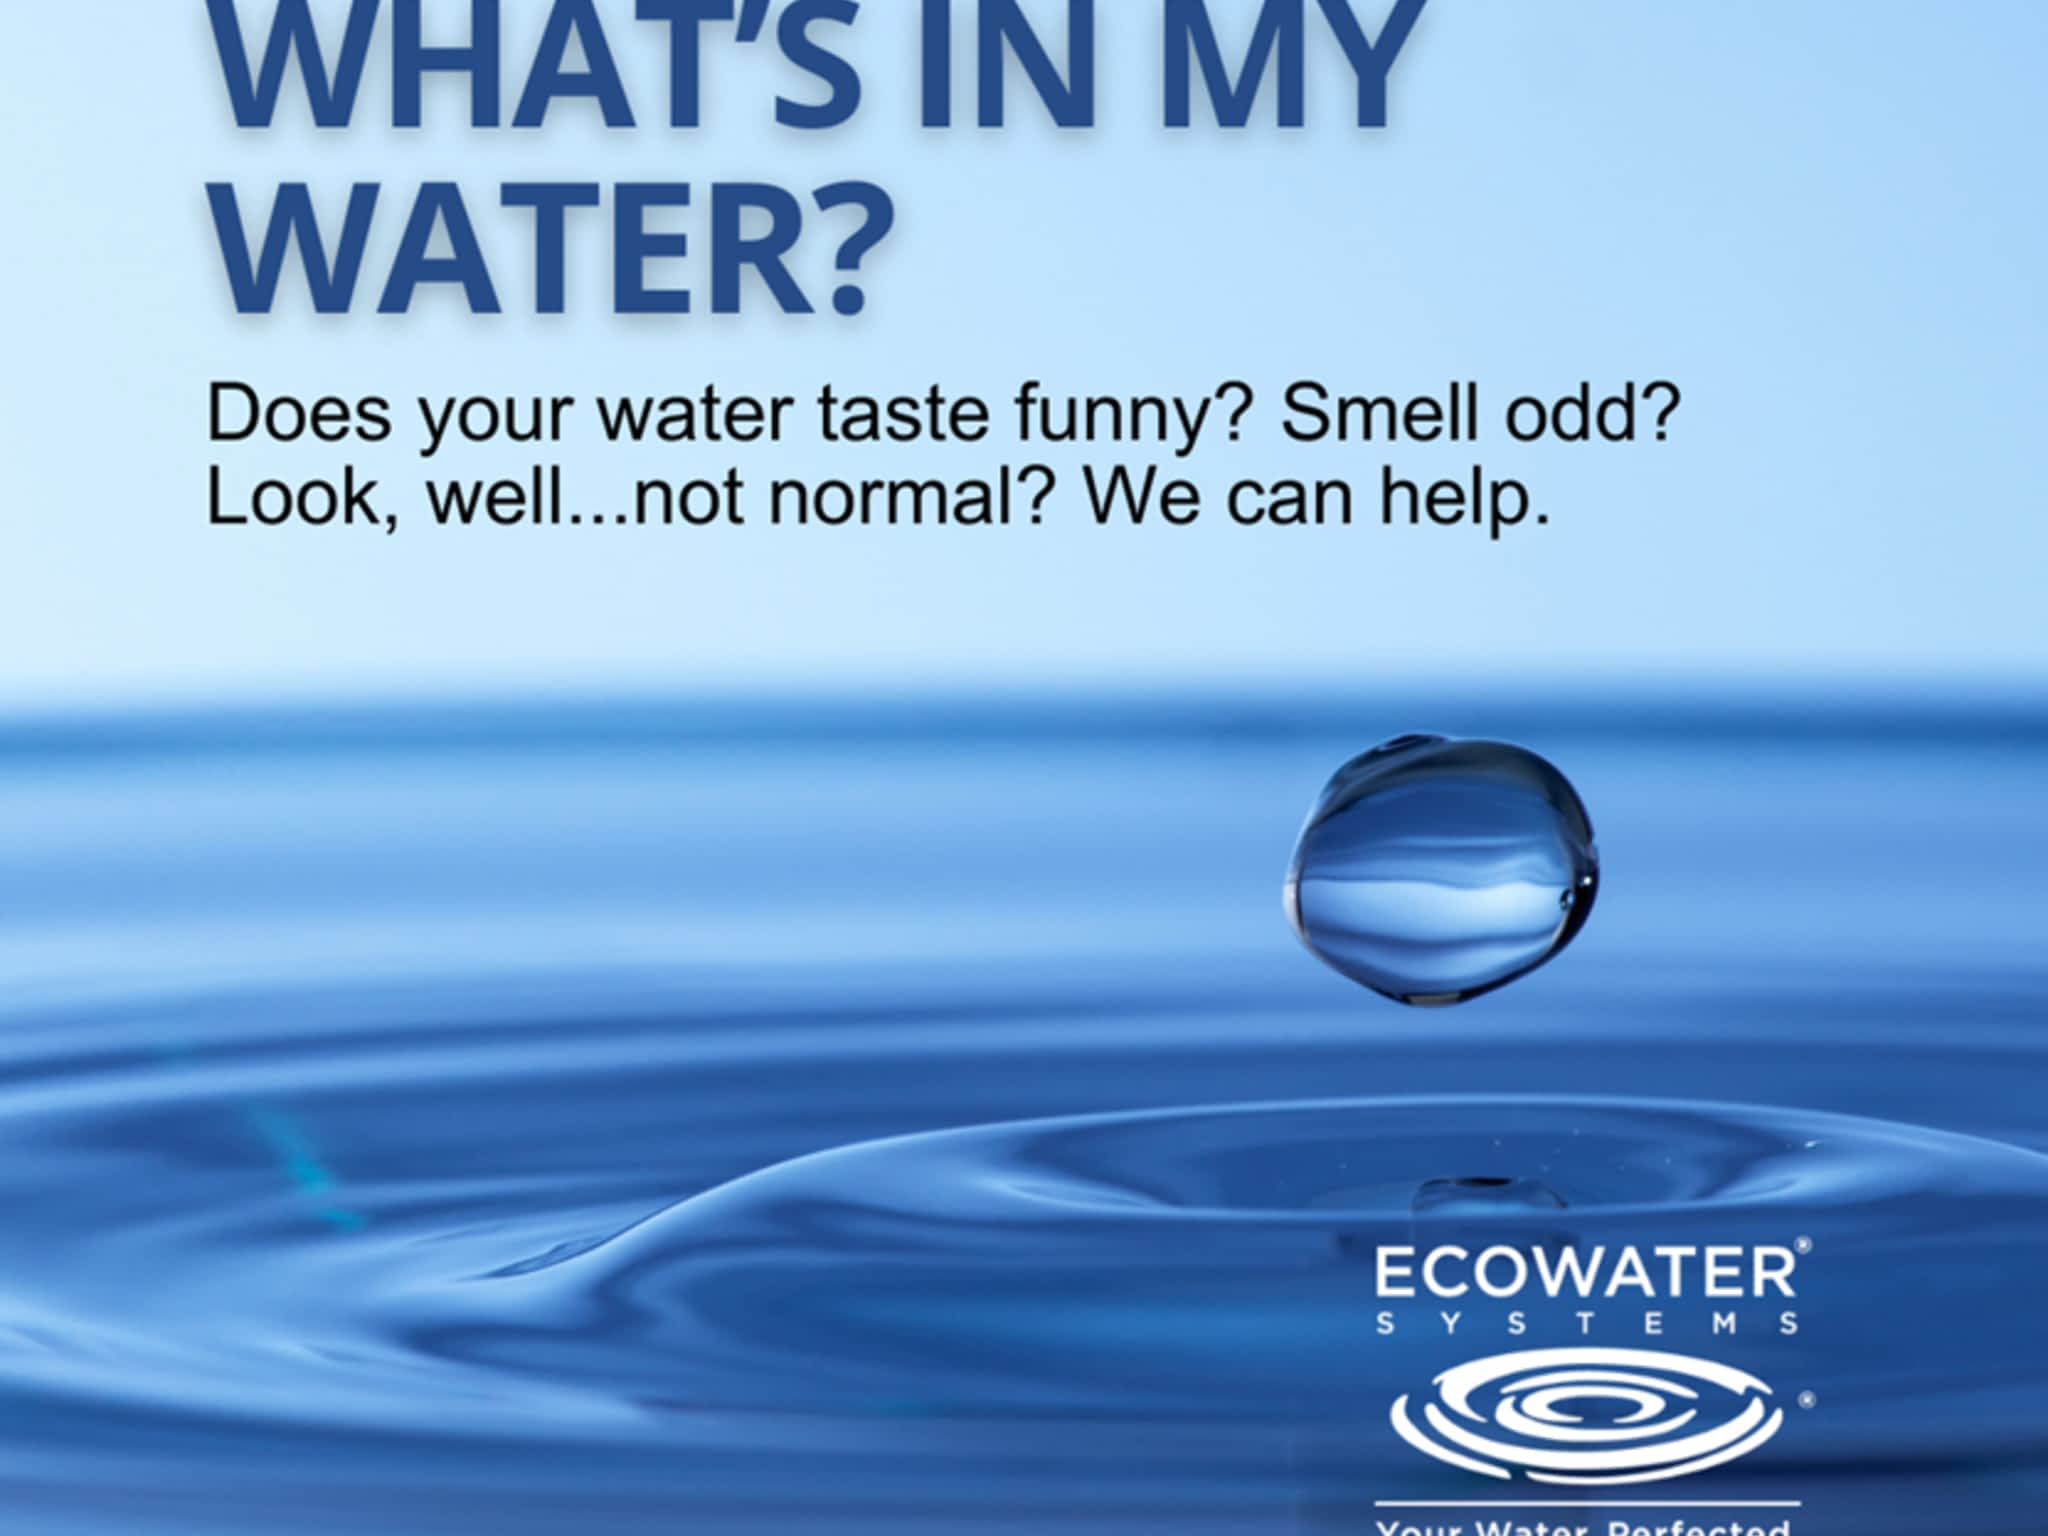 photo Eco Water Nova Scotia Limited